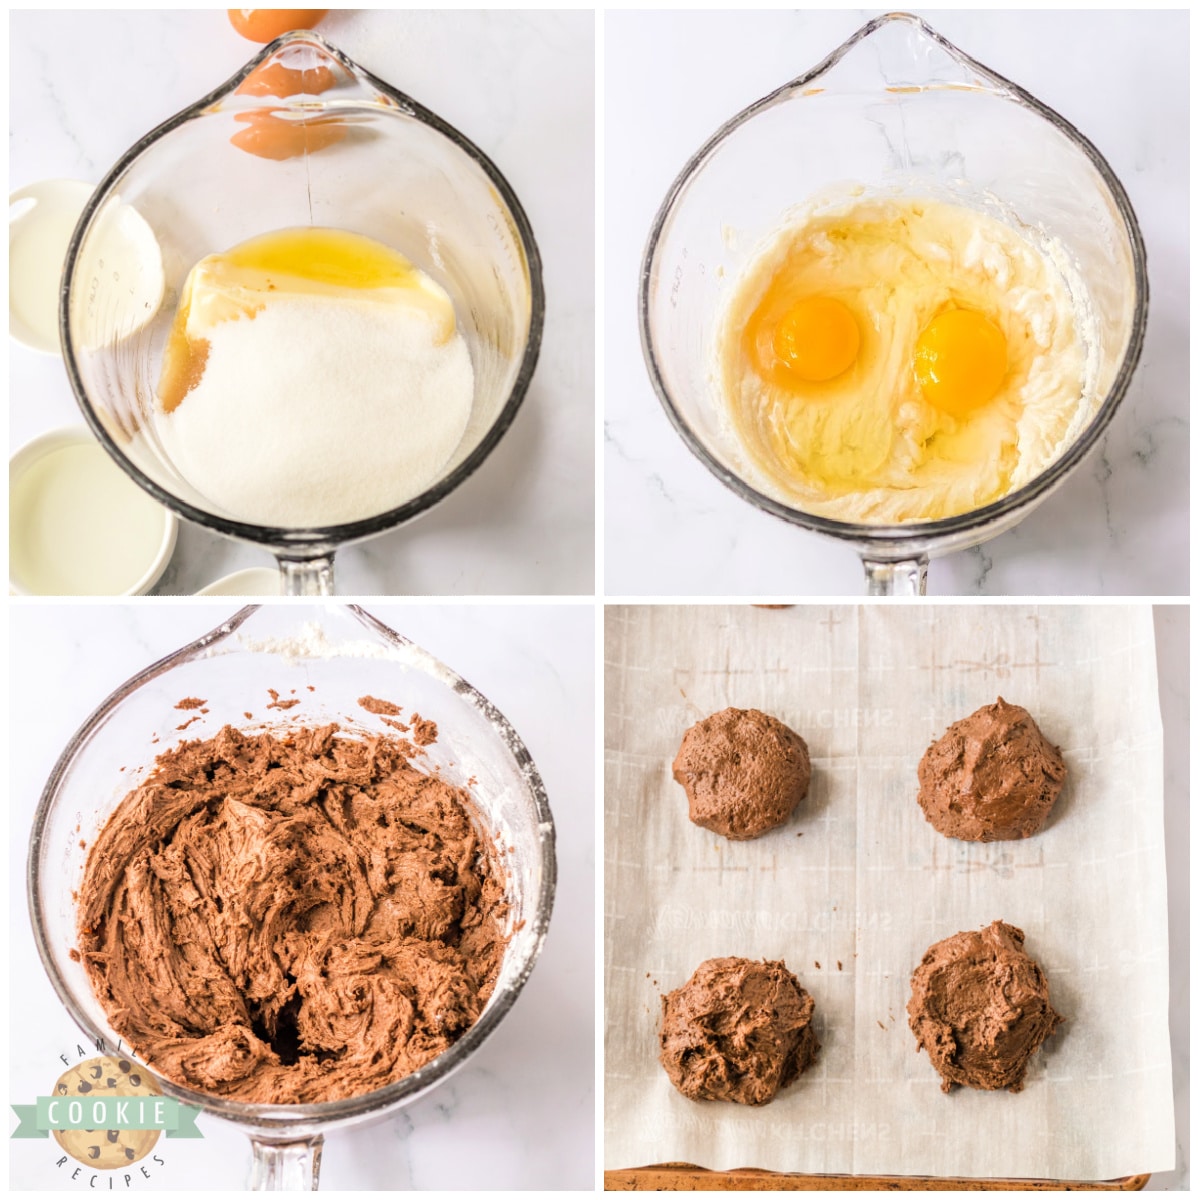 How to make chocolate cookies